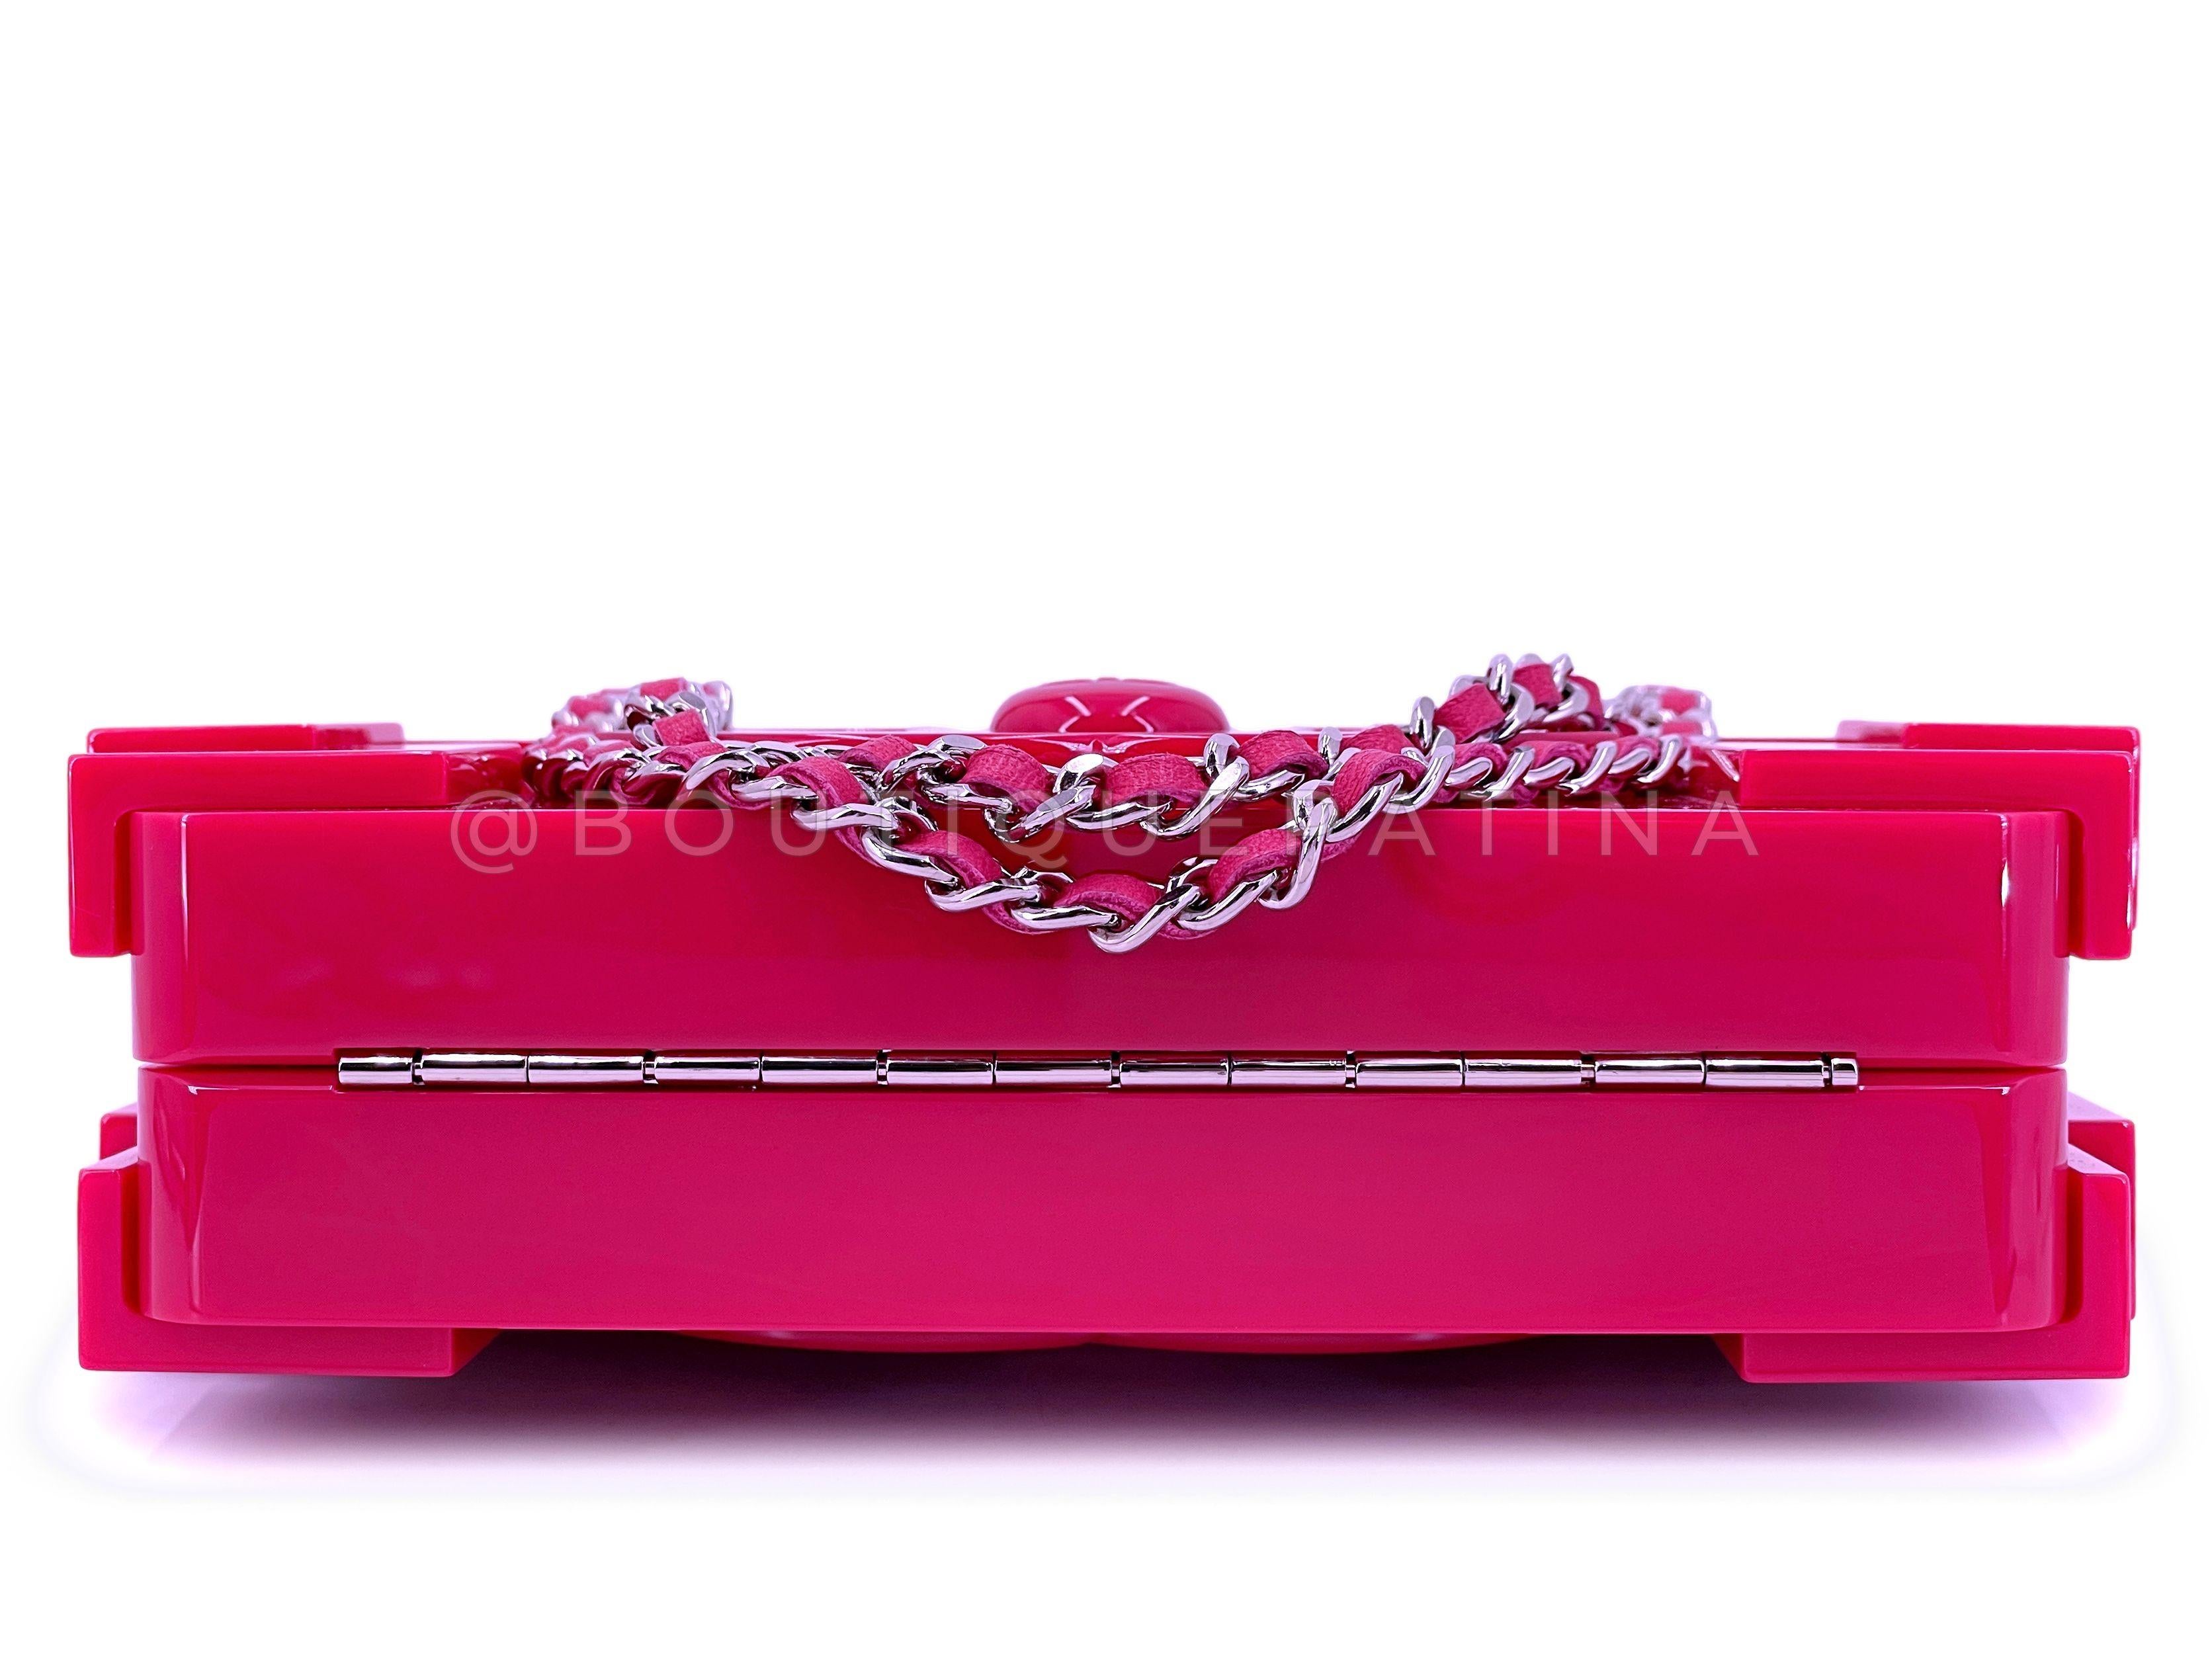 Chanel 2014 Pink Lego Brick Minaudière Plexiglass Clutch Shoulder Bag RHW 67522 For Sale 1